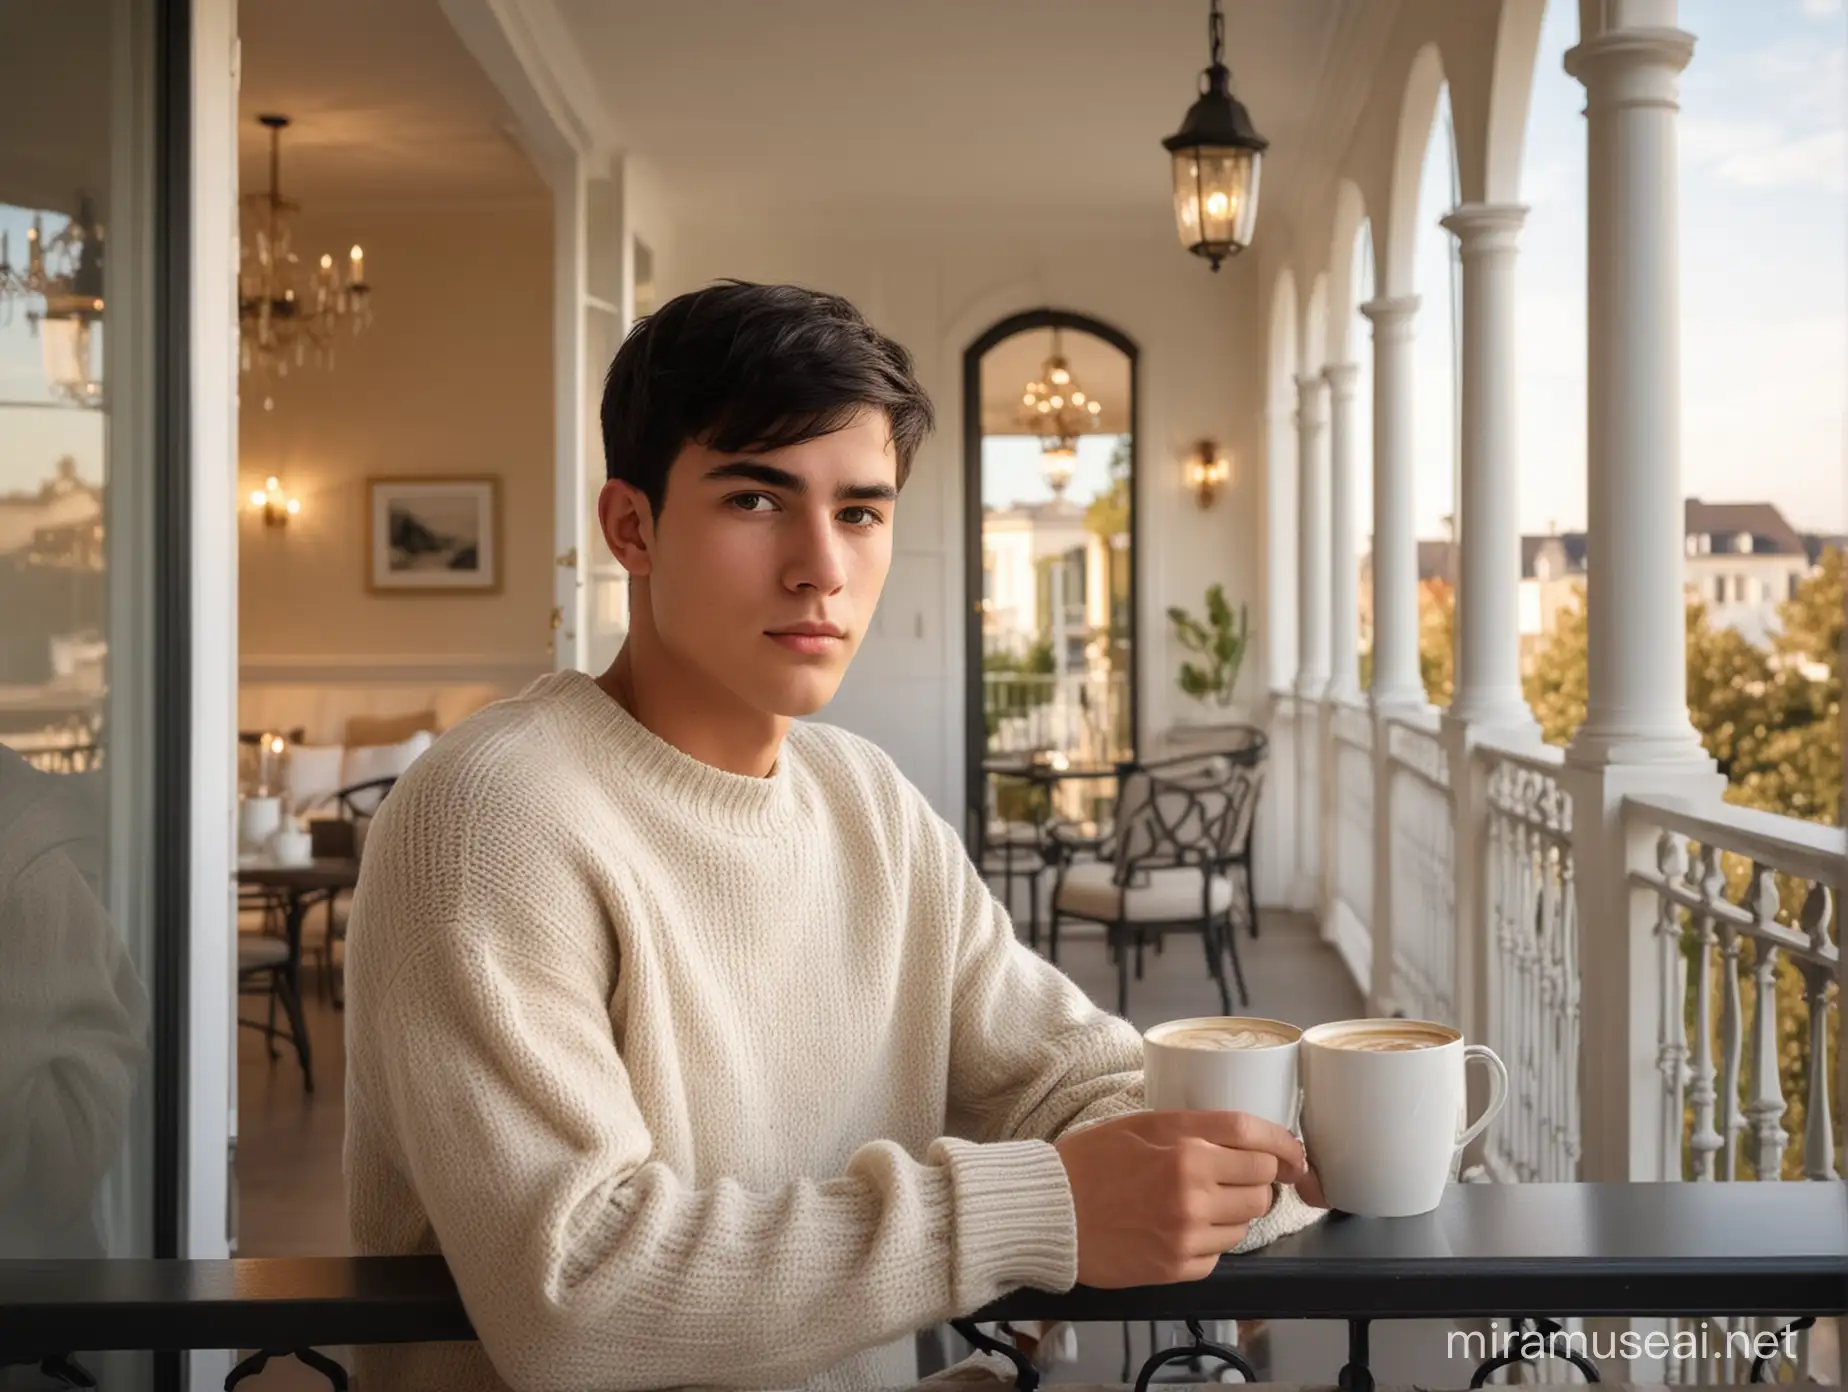 Stylish Teen Enjoying Coffee on Lavish Balcony Overlooking Luxurious Estate